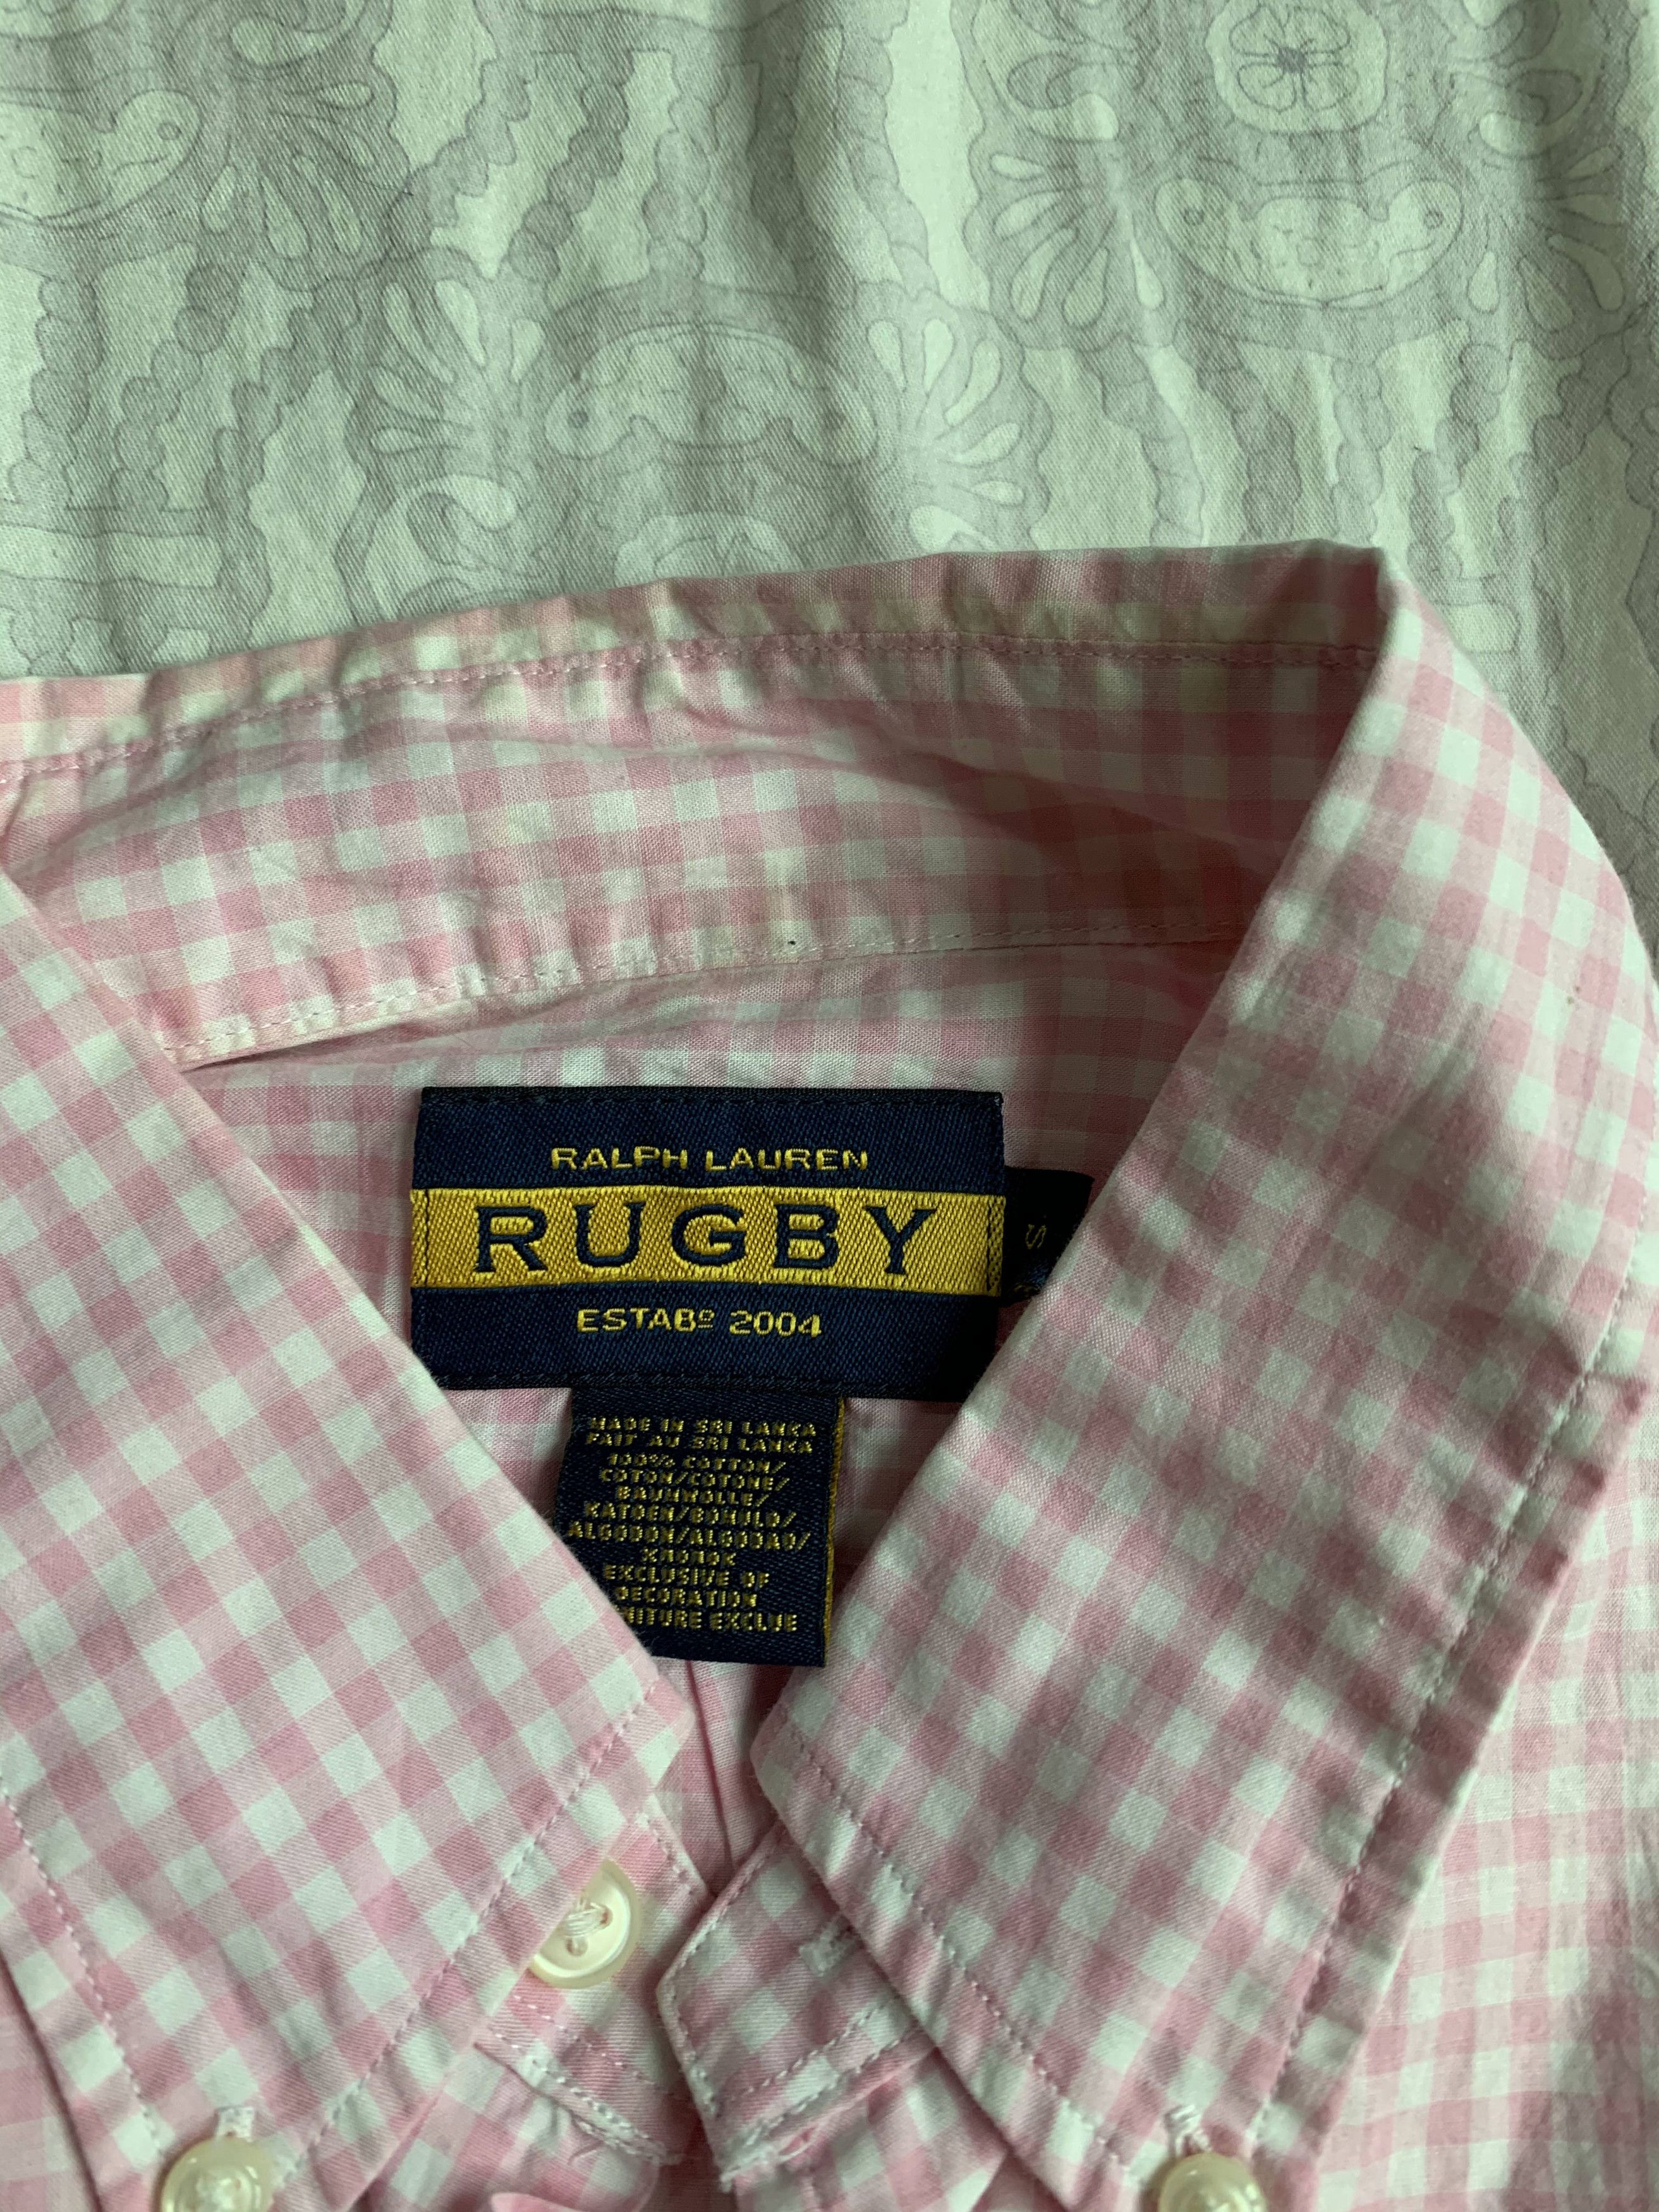 Ralph Lauren Rugby Polo Ralph Lauren Rugby Gingham Button Up Shirt $129.50 Size US S / EU 44-46 / 1 - 2 Preview